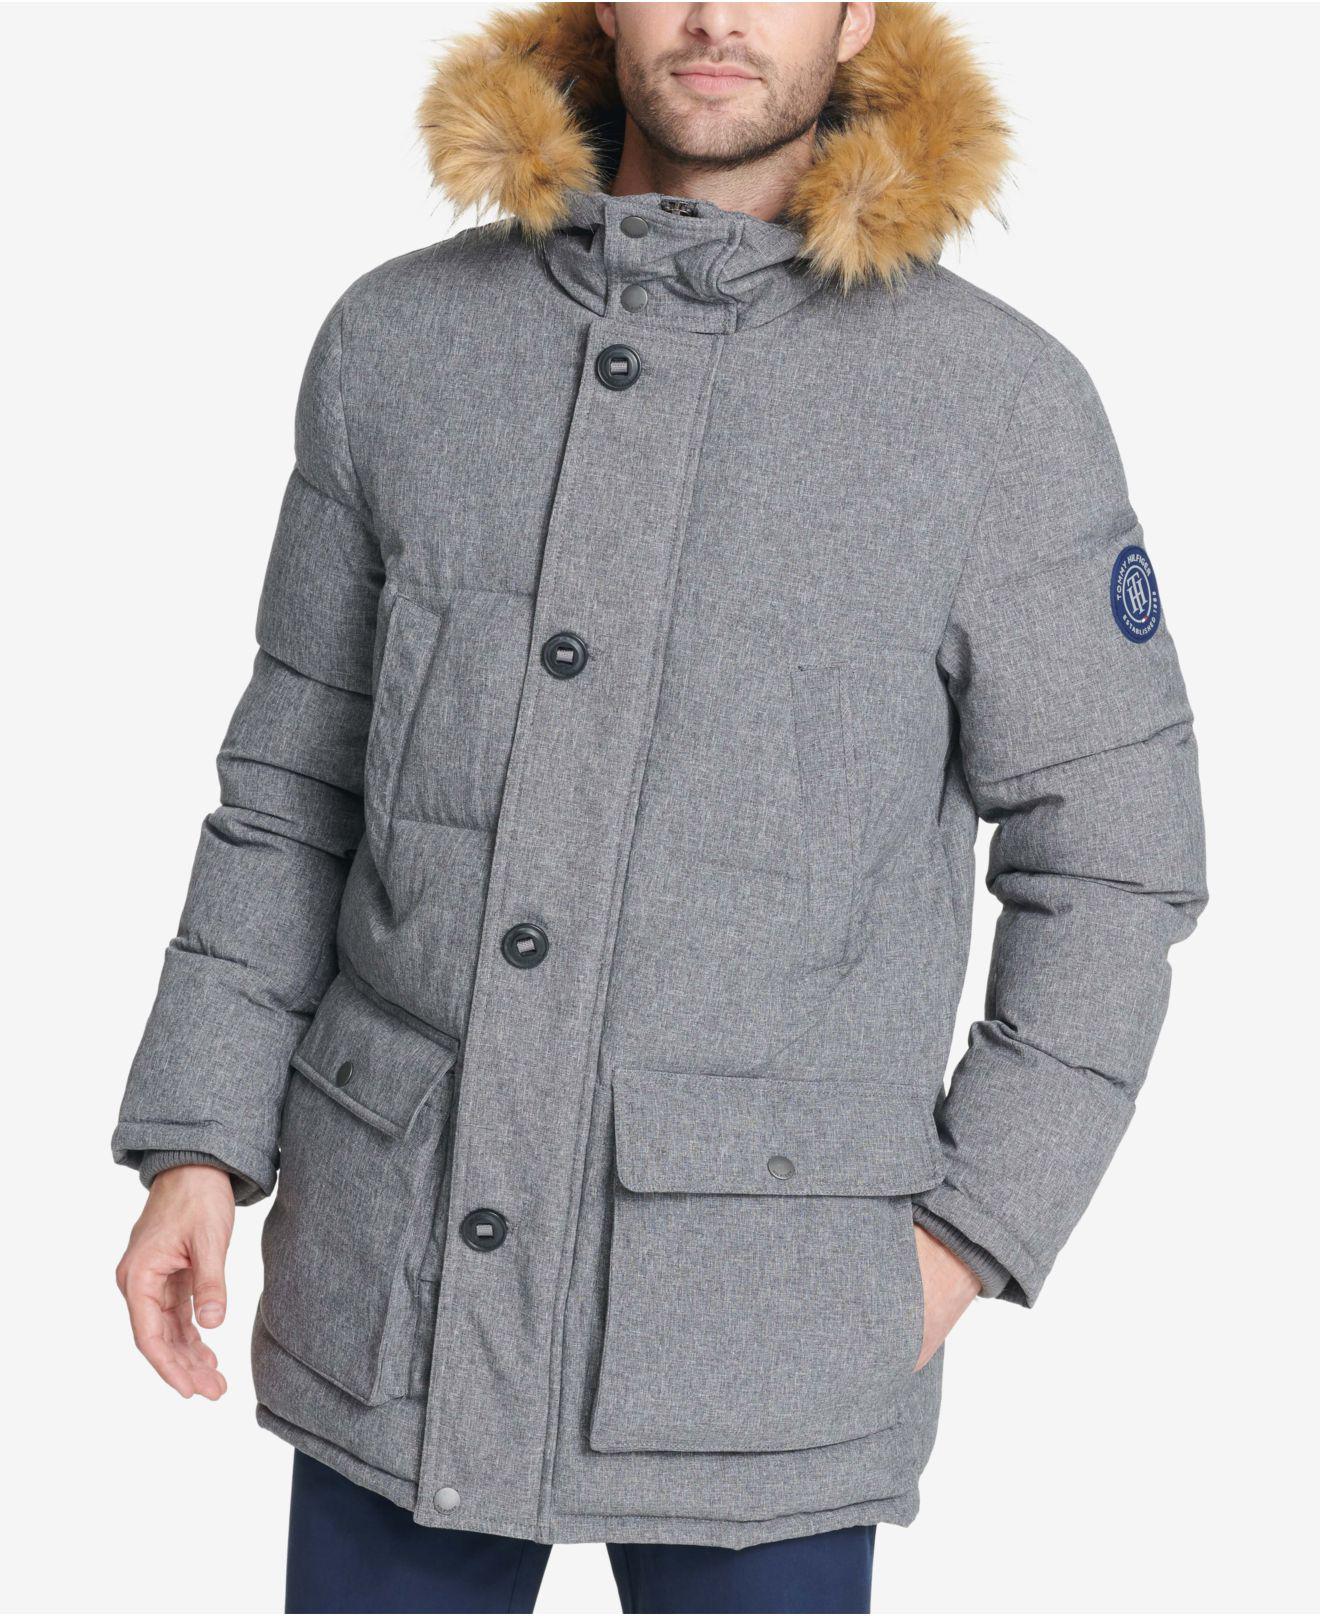 gray tommy hilfiger jacket